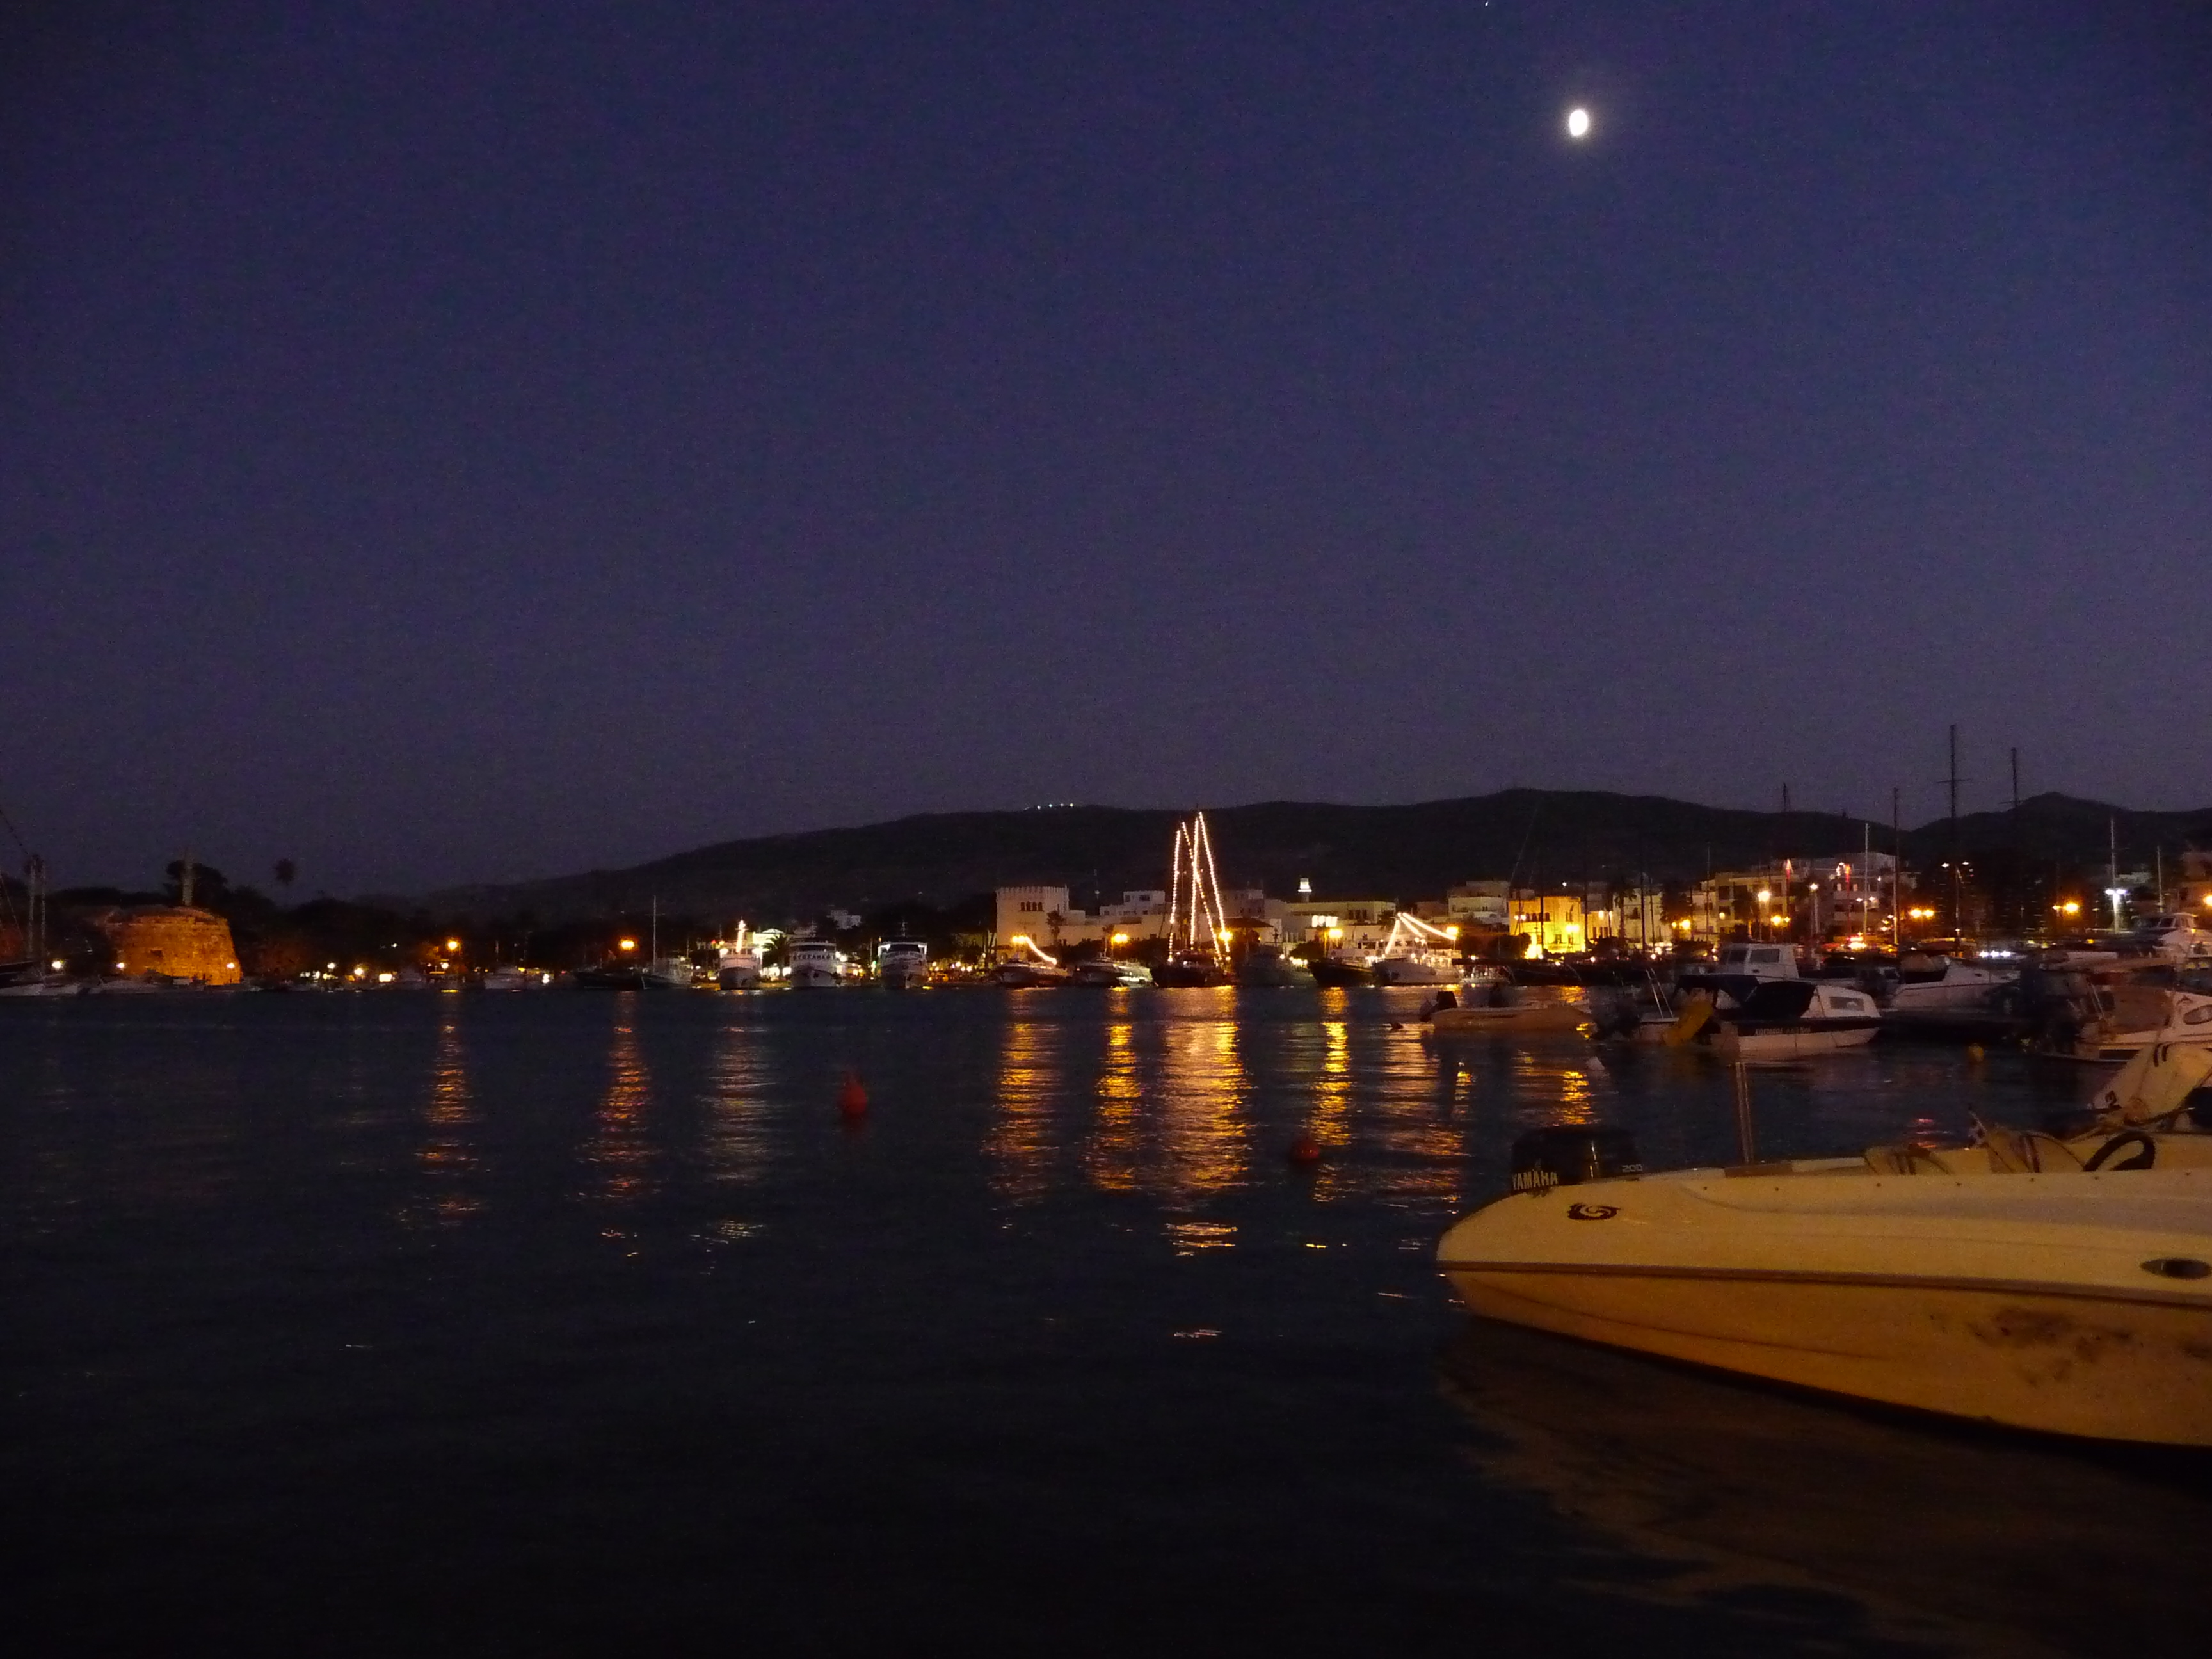 File:Kos Harbour at Night.JPG - Wikimedia Commons